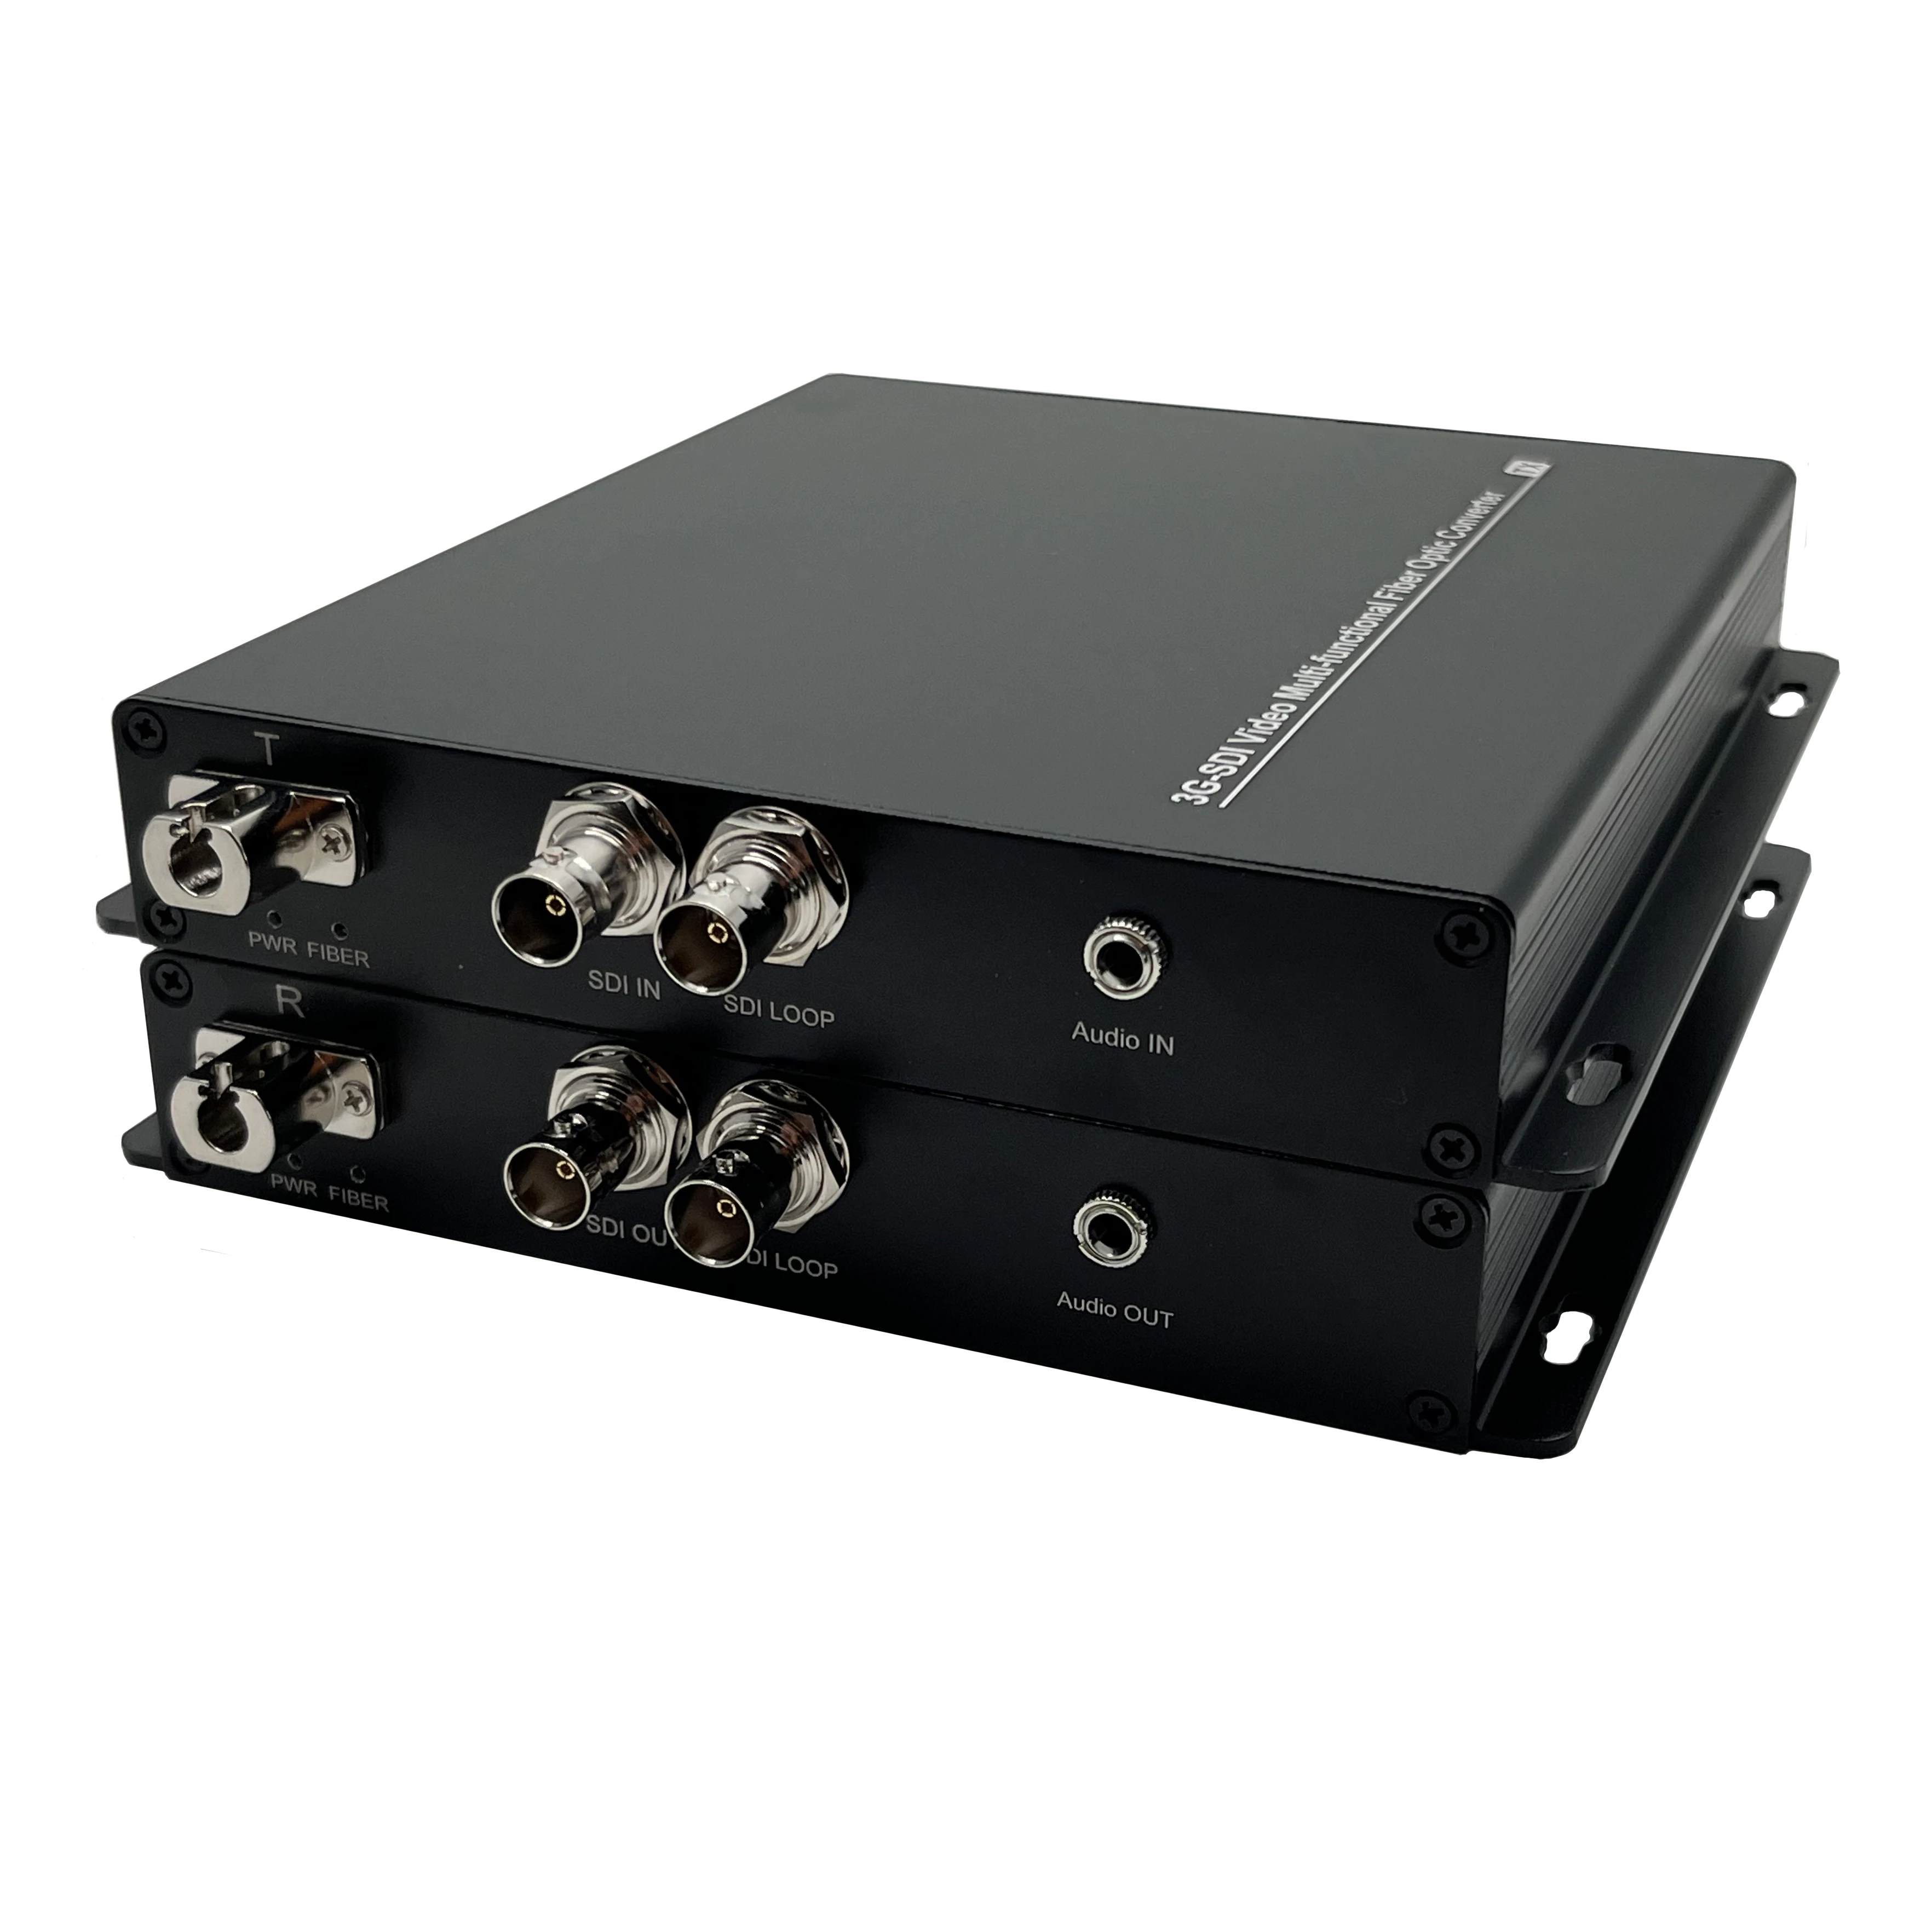 

2Ch Forward 3G-SDI With 1Ch 3.5mm Audio to Fiber Converter 1080P Broadcast Level SDI Video Optical Transceiver